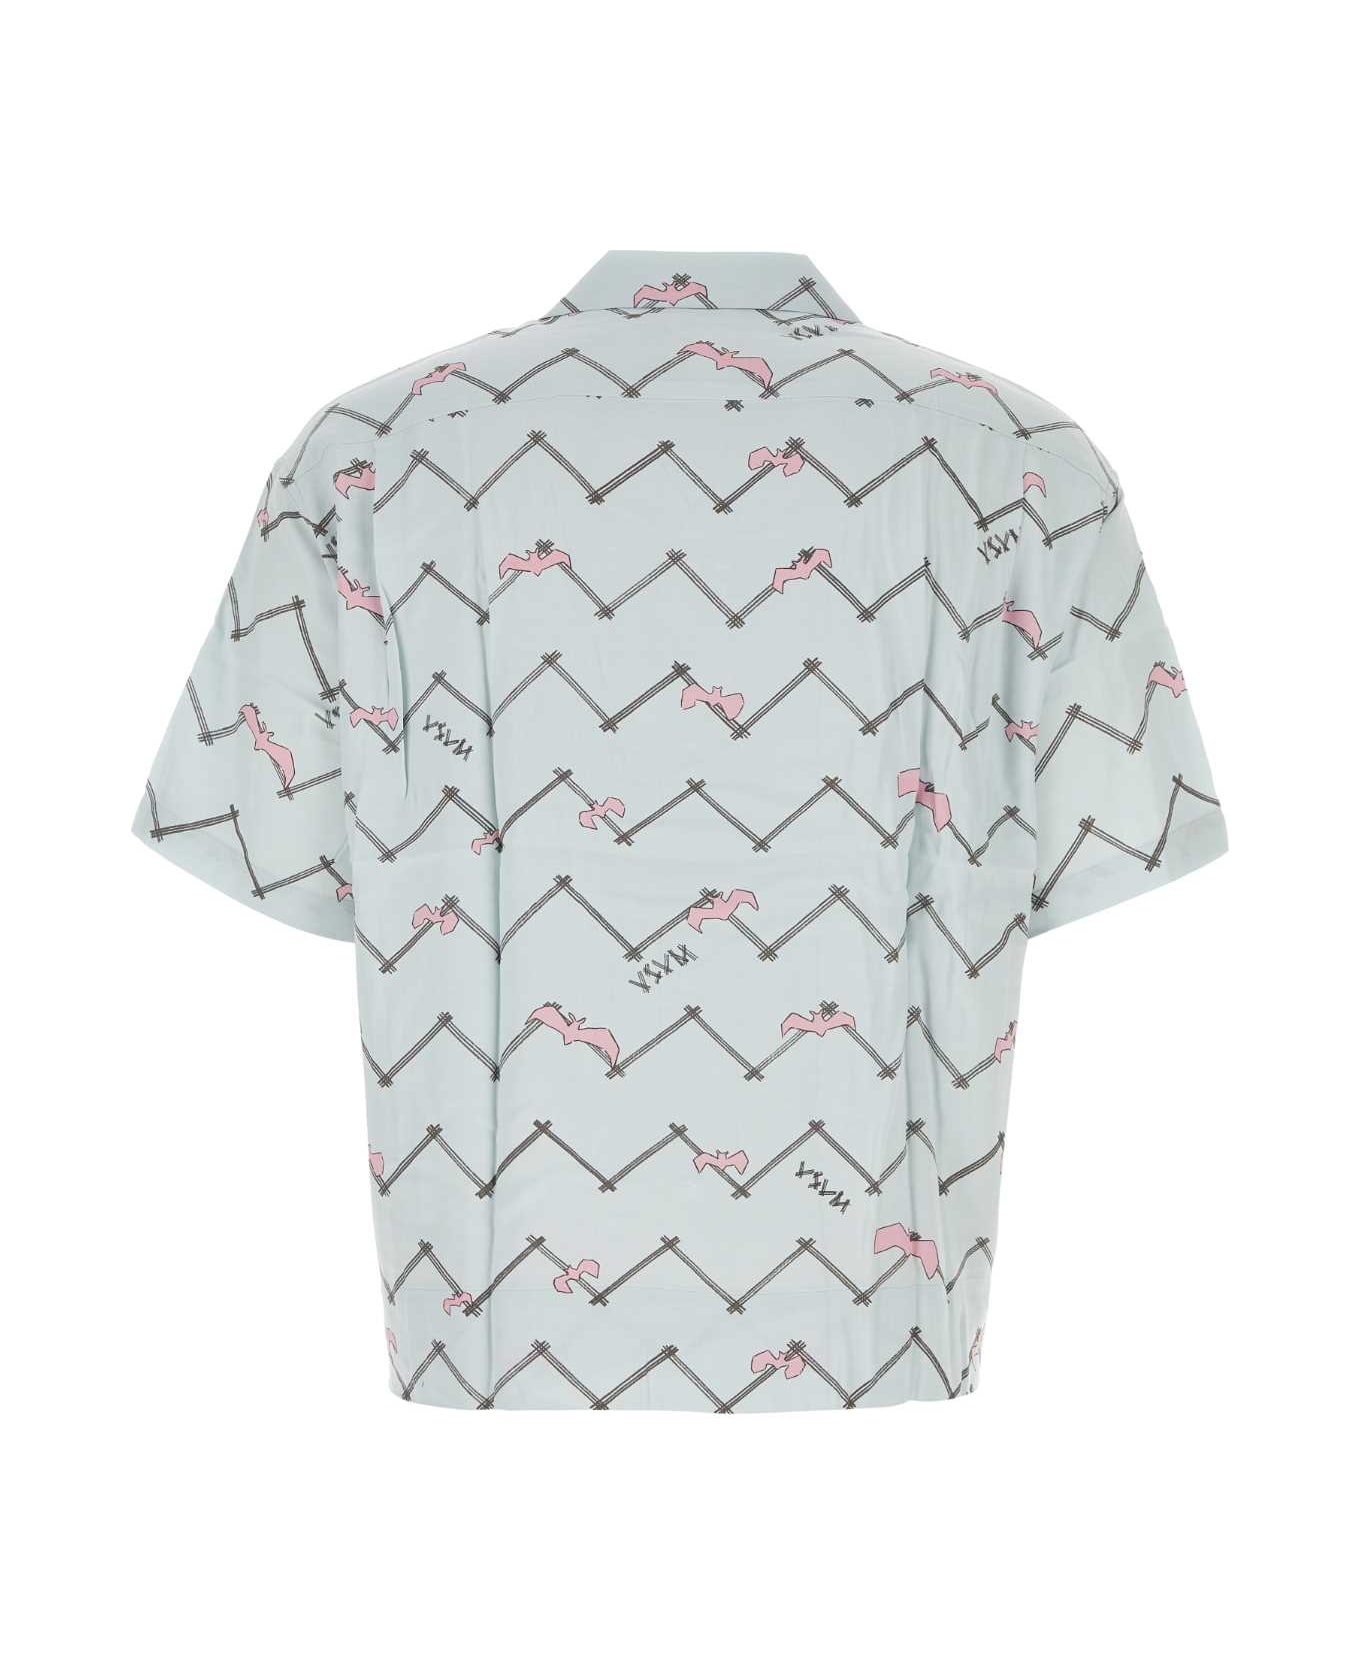 Visvim Printed Rayon Copa Shirt - LTBLUE